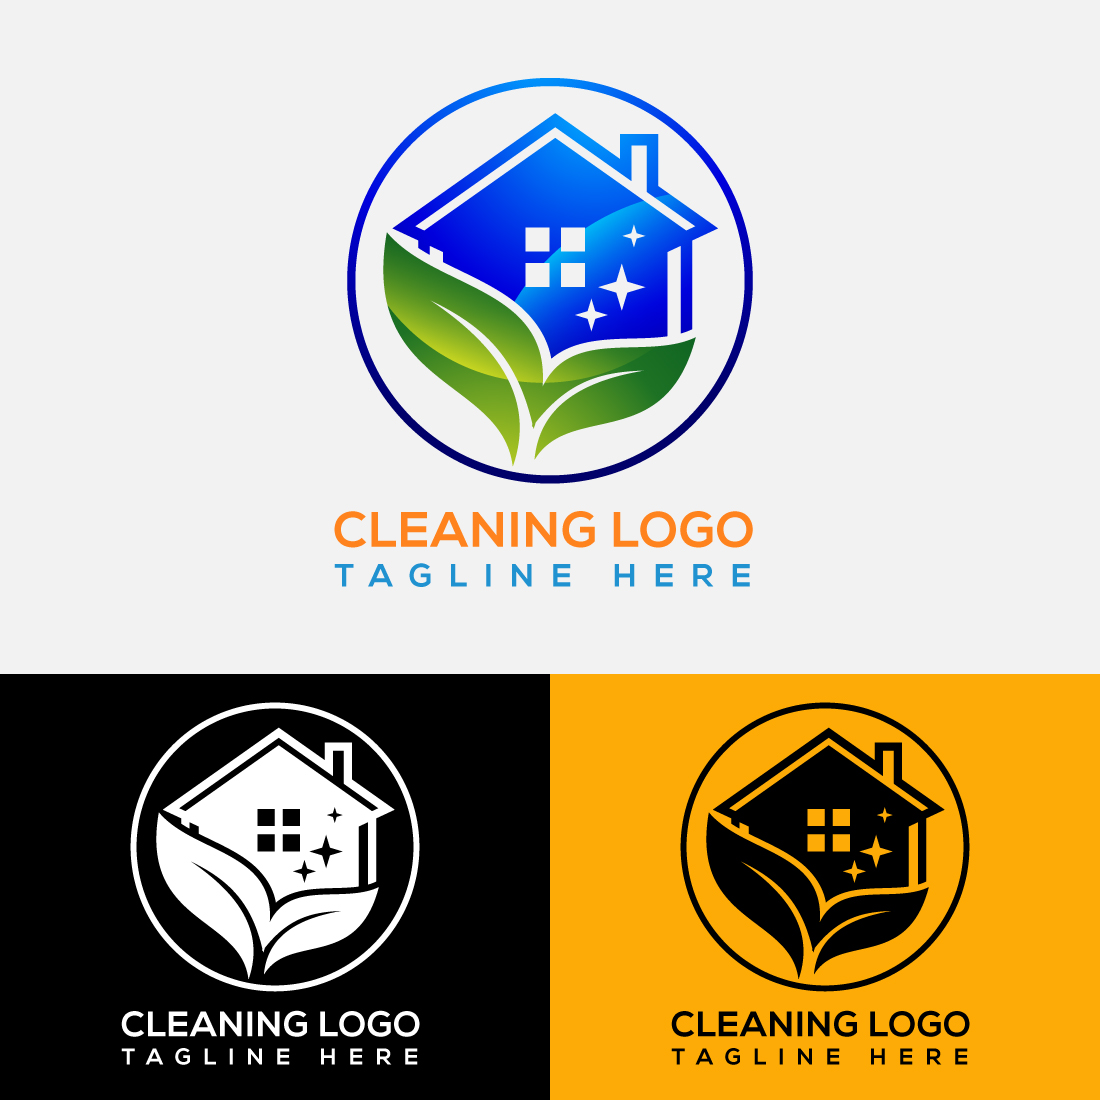 Maintenance Logo Design Vector Template cover image.